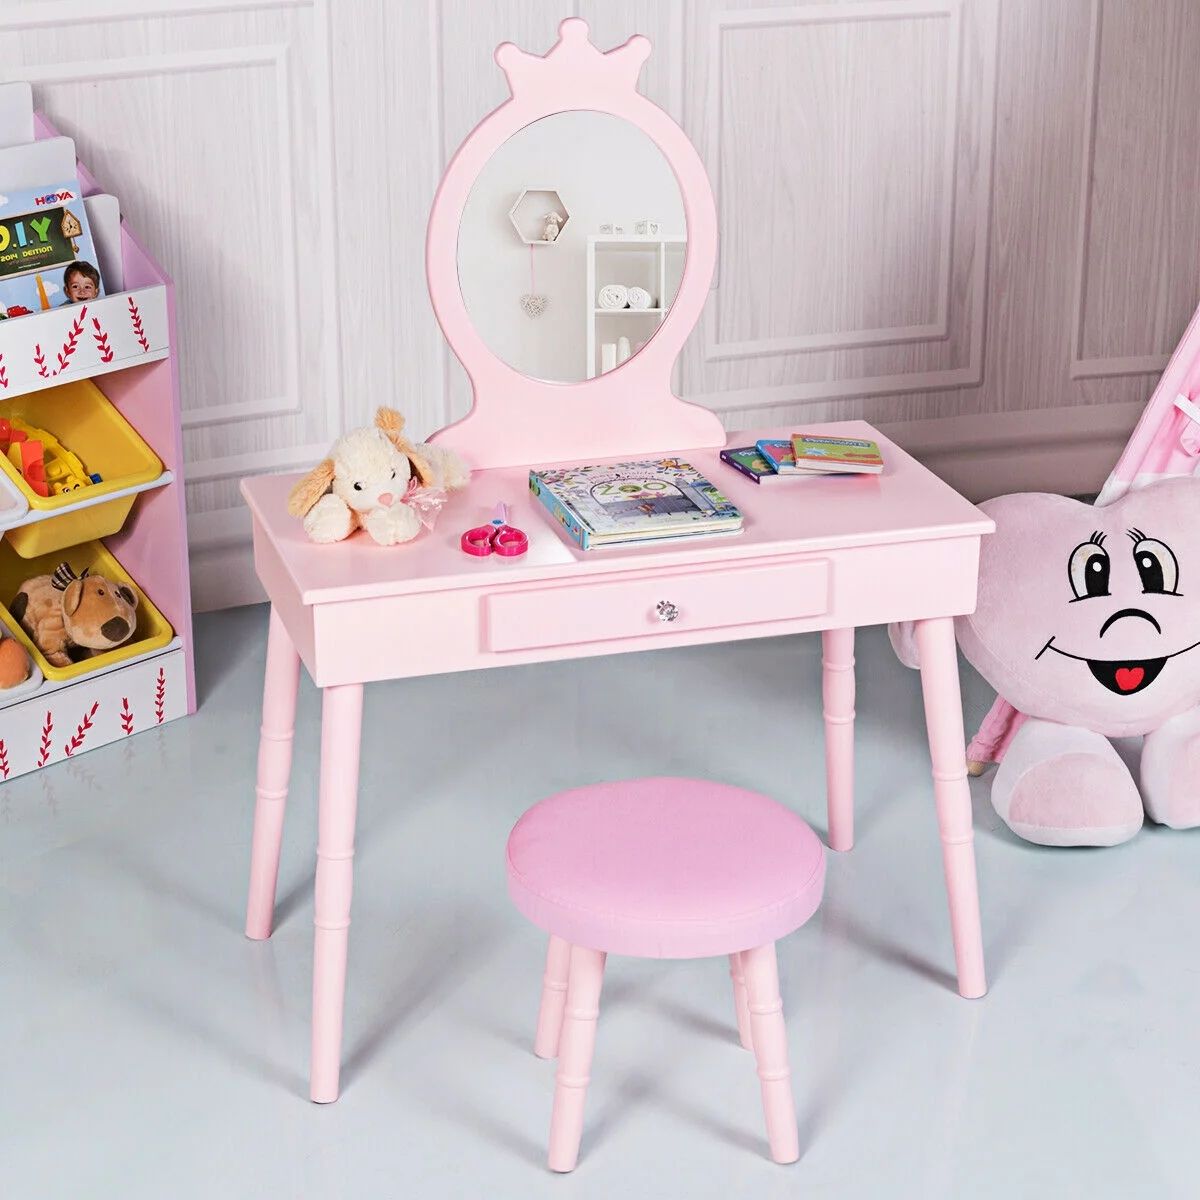 Gymax Kids Vanity Makeup Table & Chair Set Make Up Stool Play Set for Children Pink | Walmart (US)